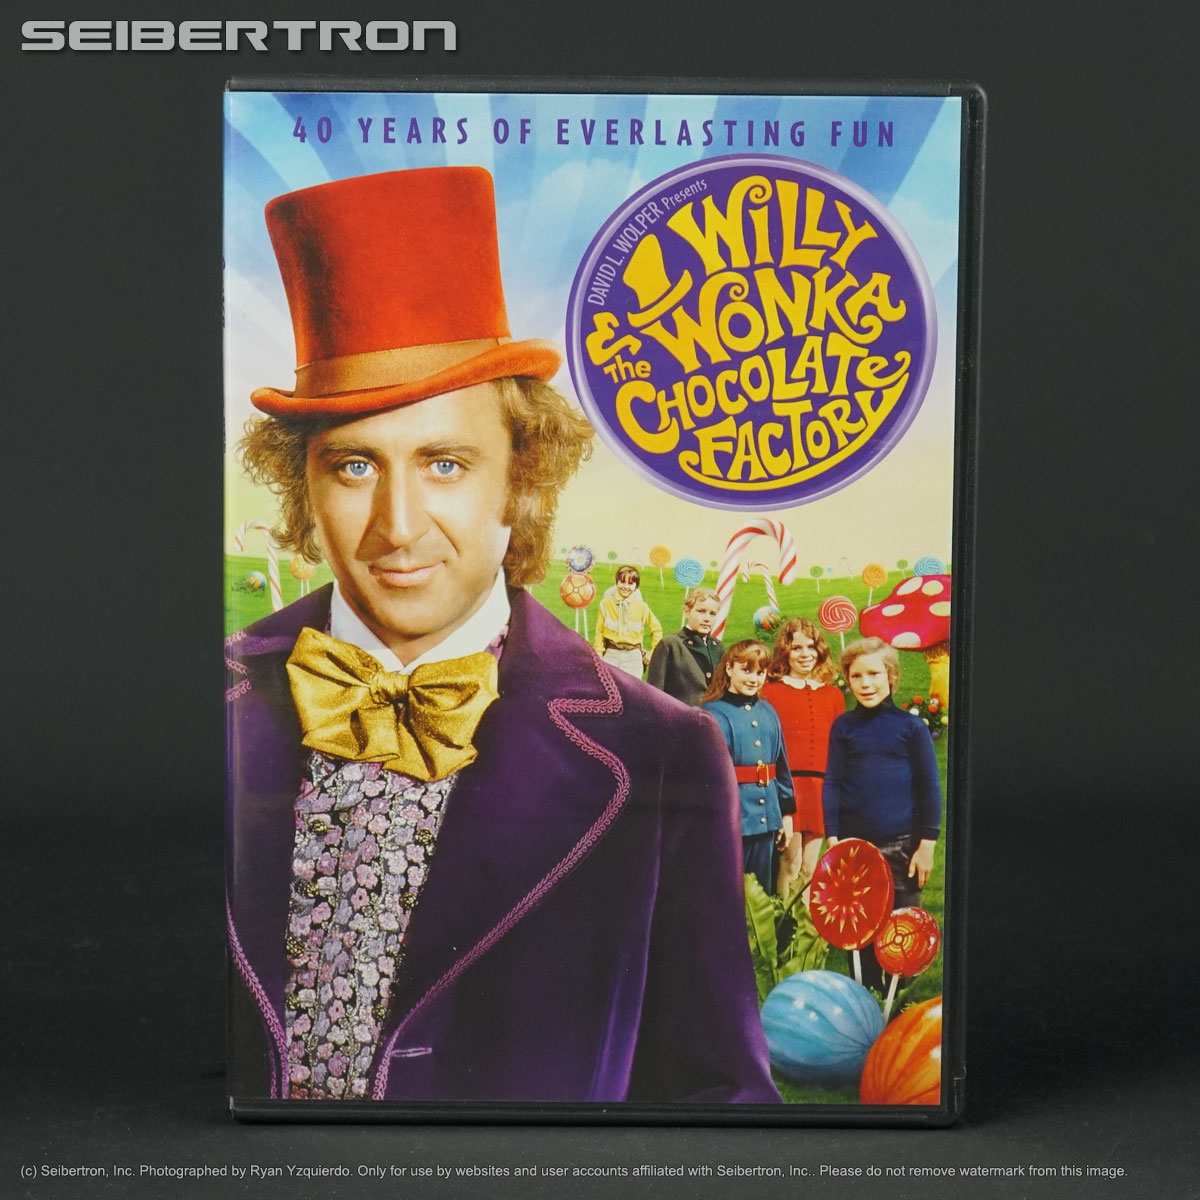 WILLY WONKA & THE CHOCOLATE FACTORY 2011 DVD Gene Wilder Warner Brothers